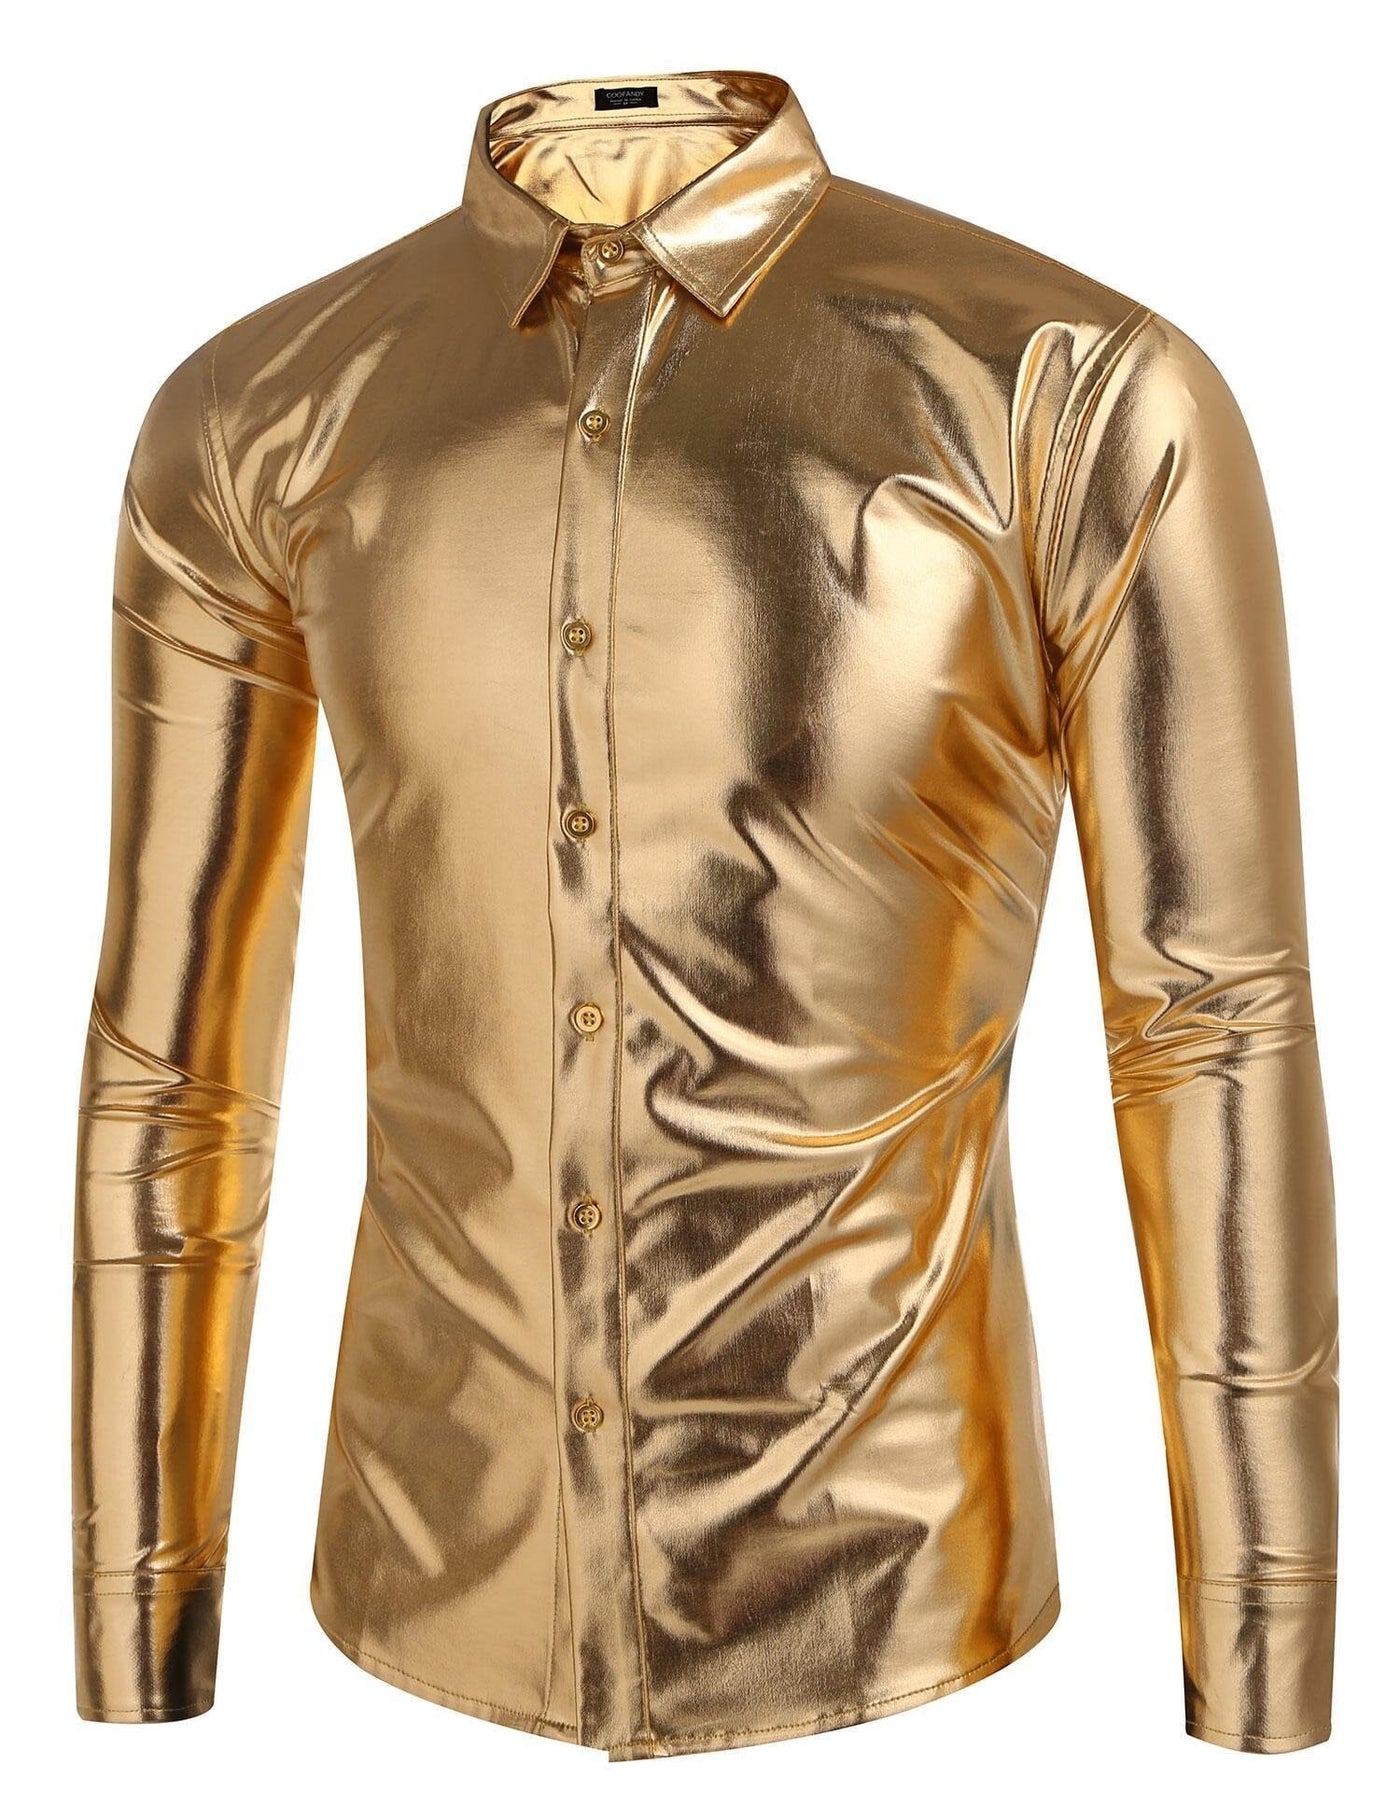 Metallic Disco Shiny Button Nightclub Party Shirt (US Only) Shirts coofandy Golden S 